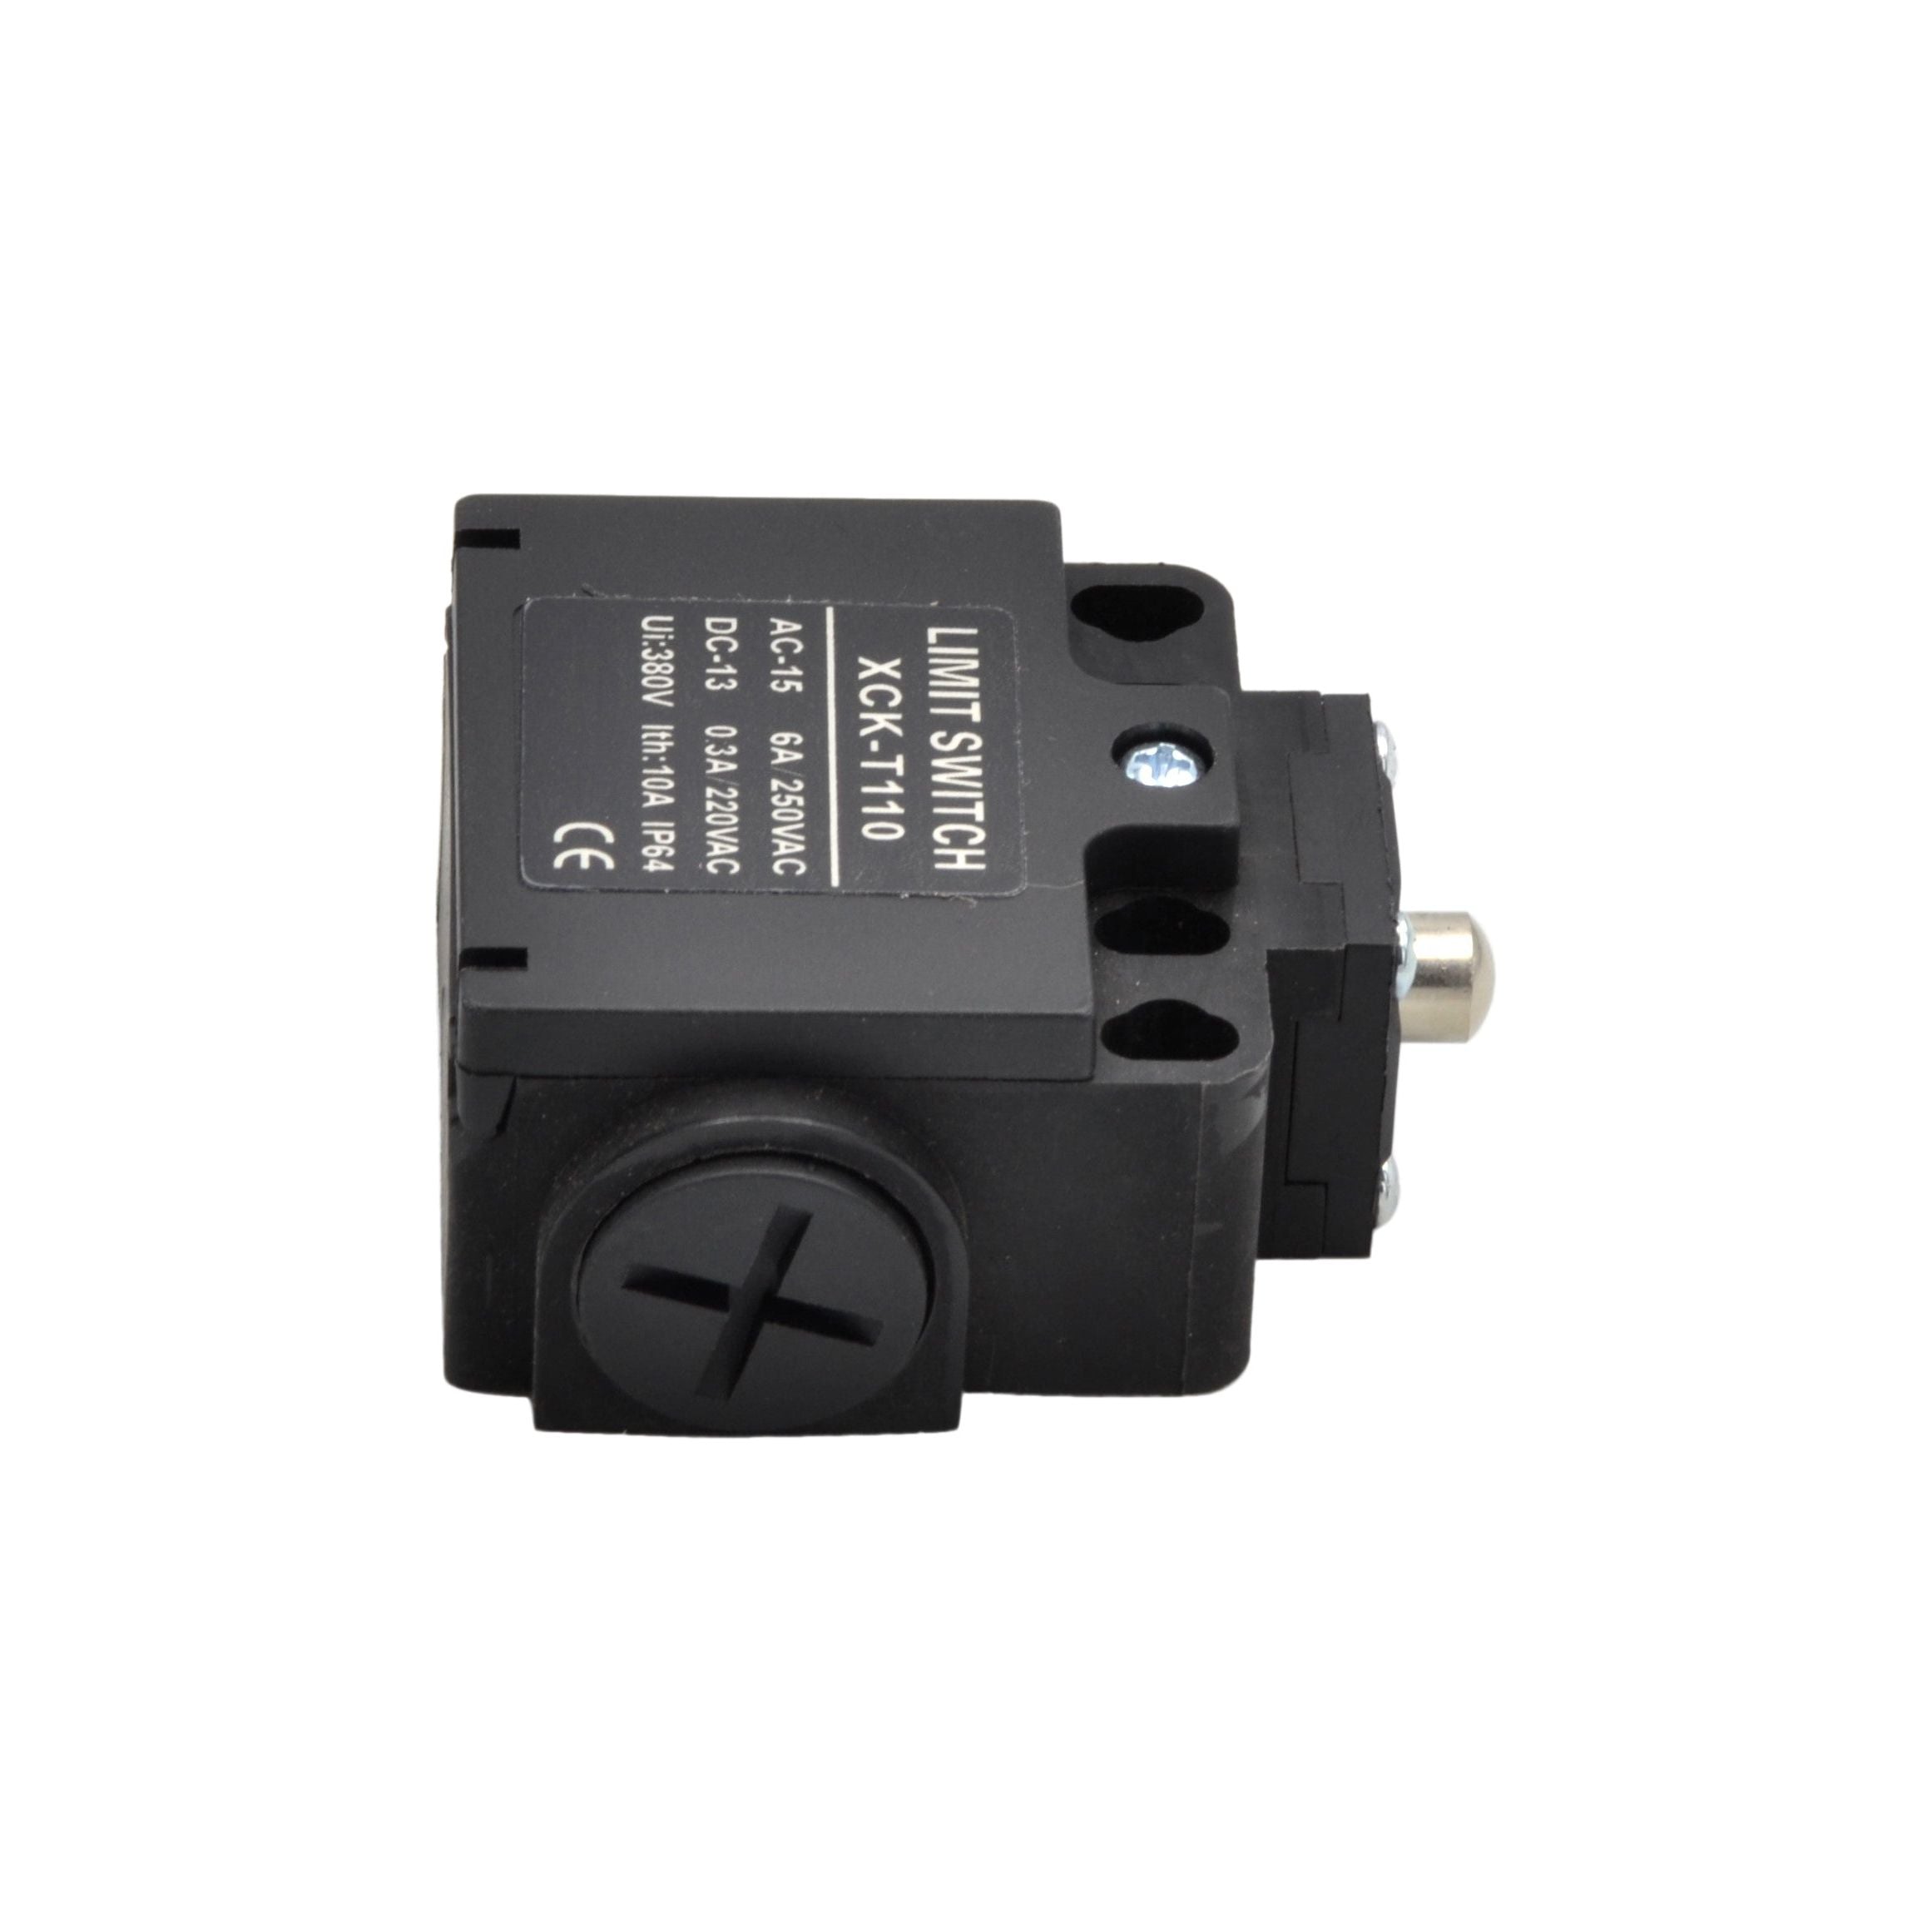 XCK-T110 Short Spring Plunger Actuator Limit Switch